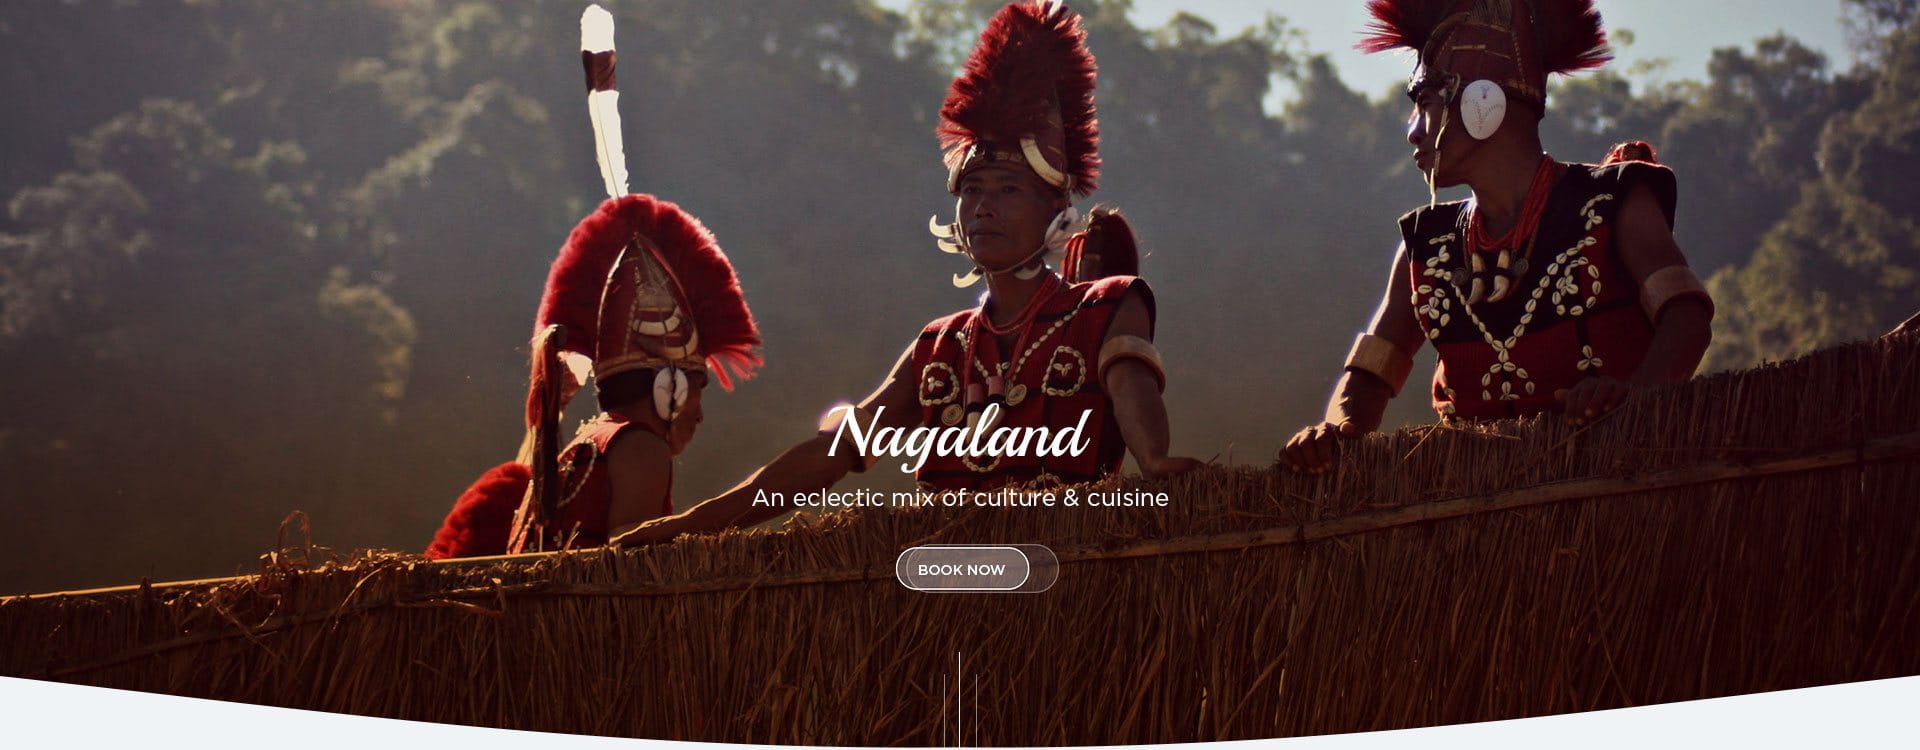 Nagaland Tourism - Eastern Meadows Tour